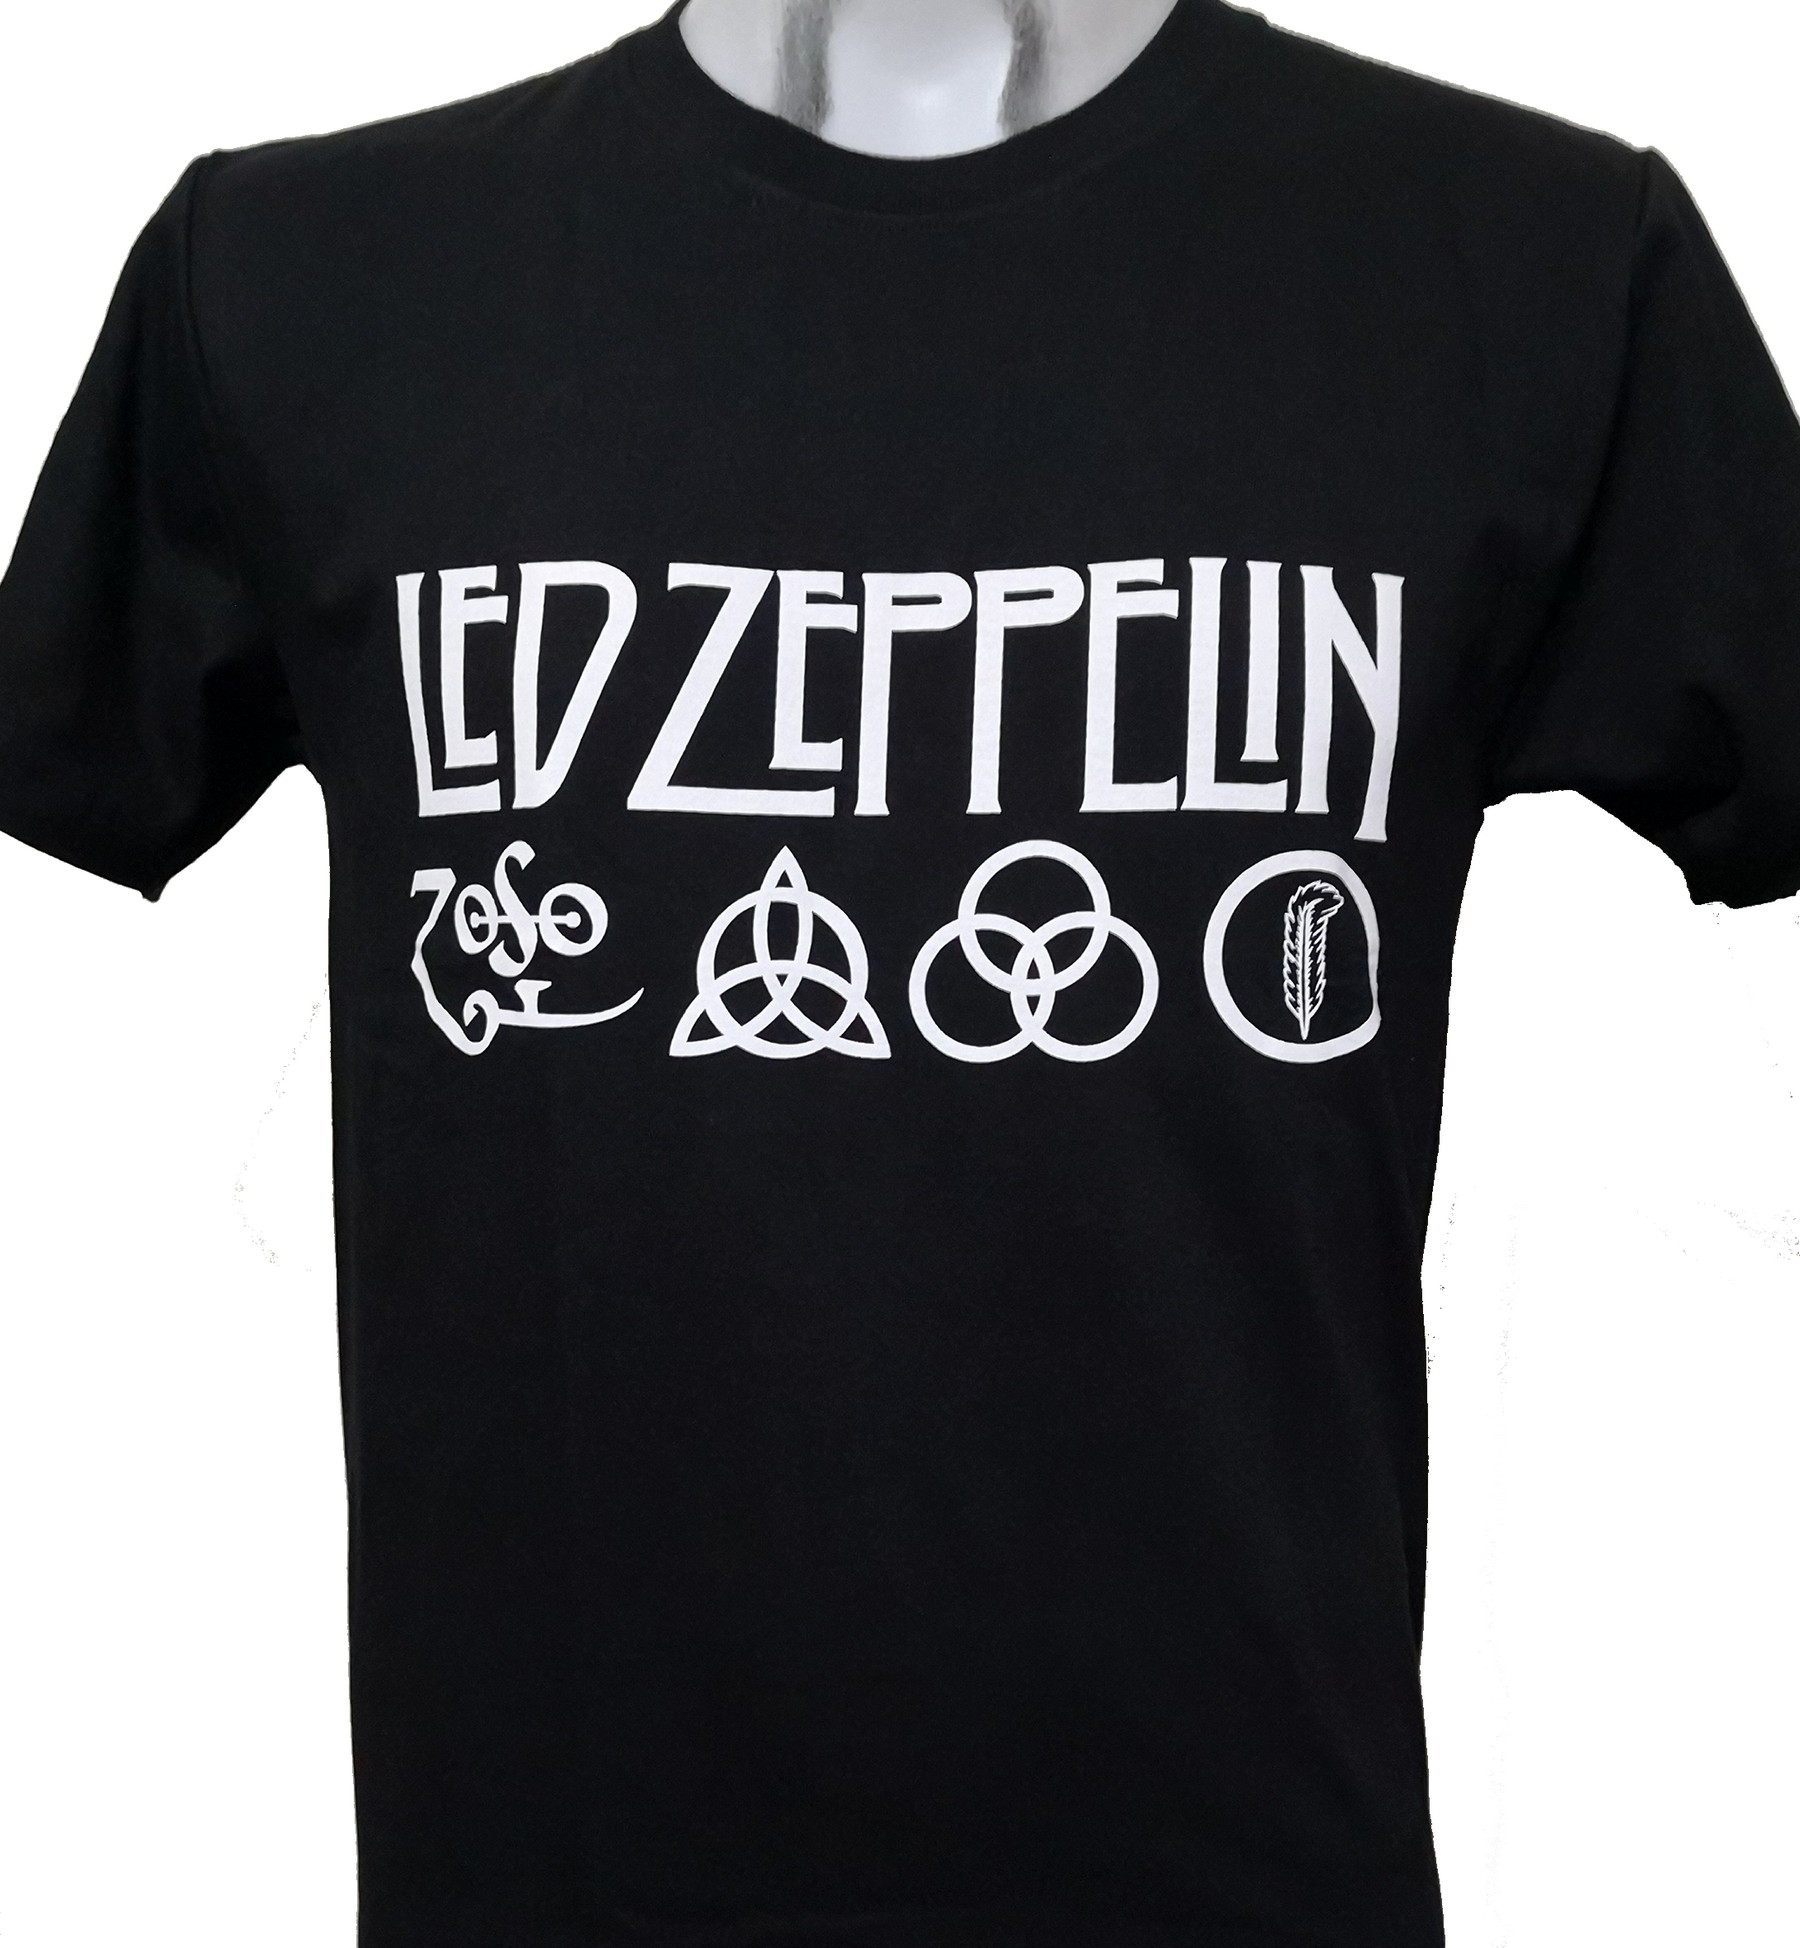 Led Zeppelin t-shirt size L